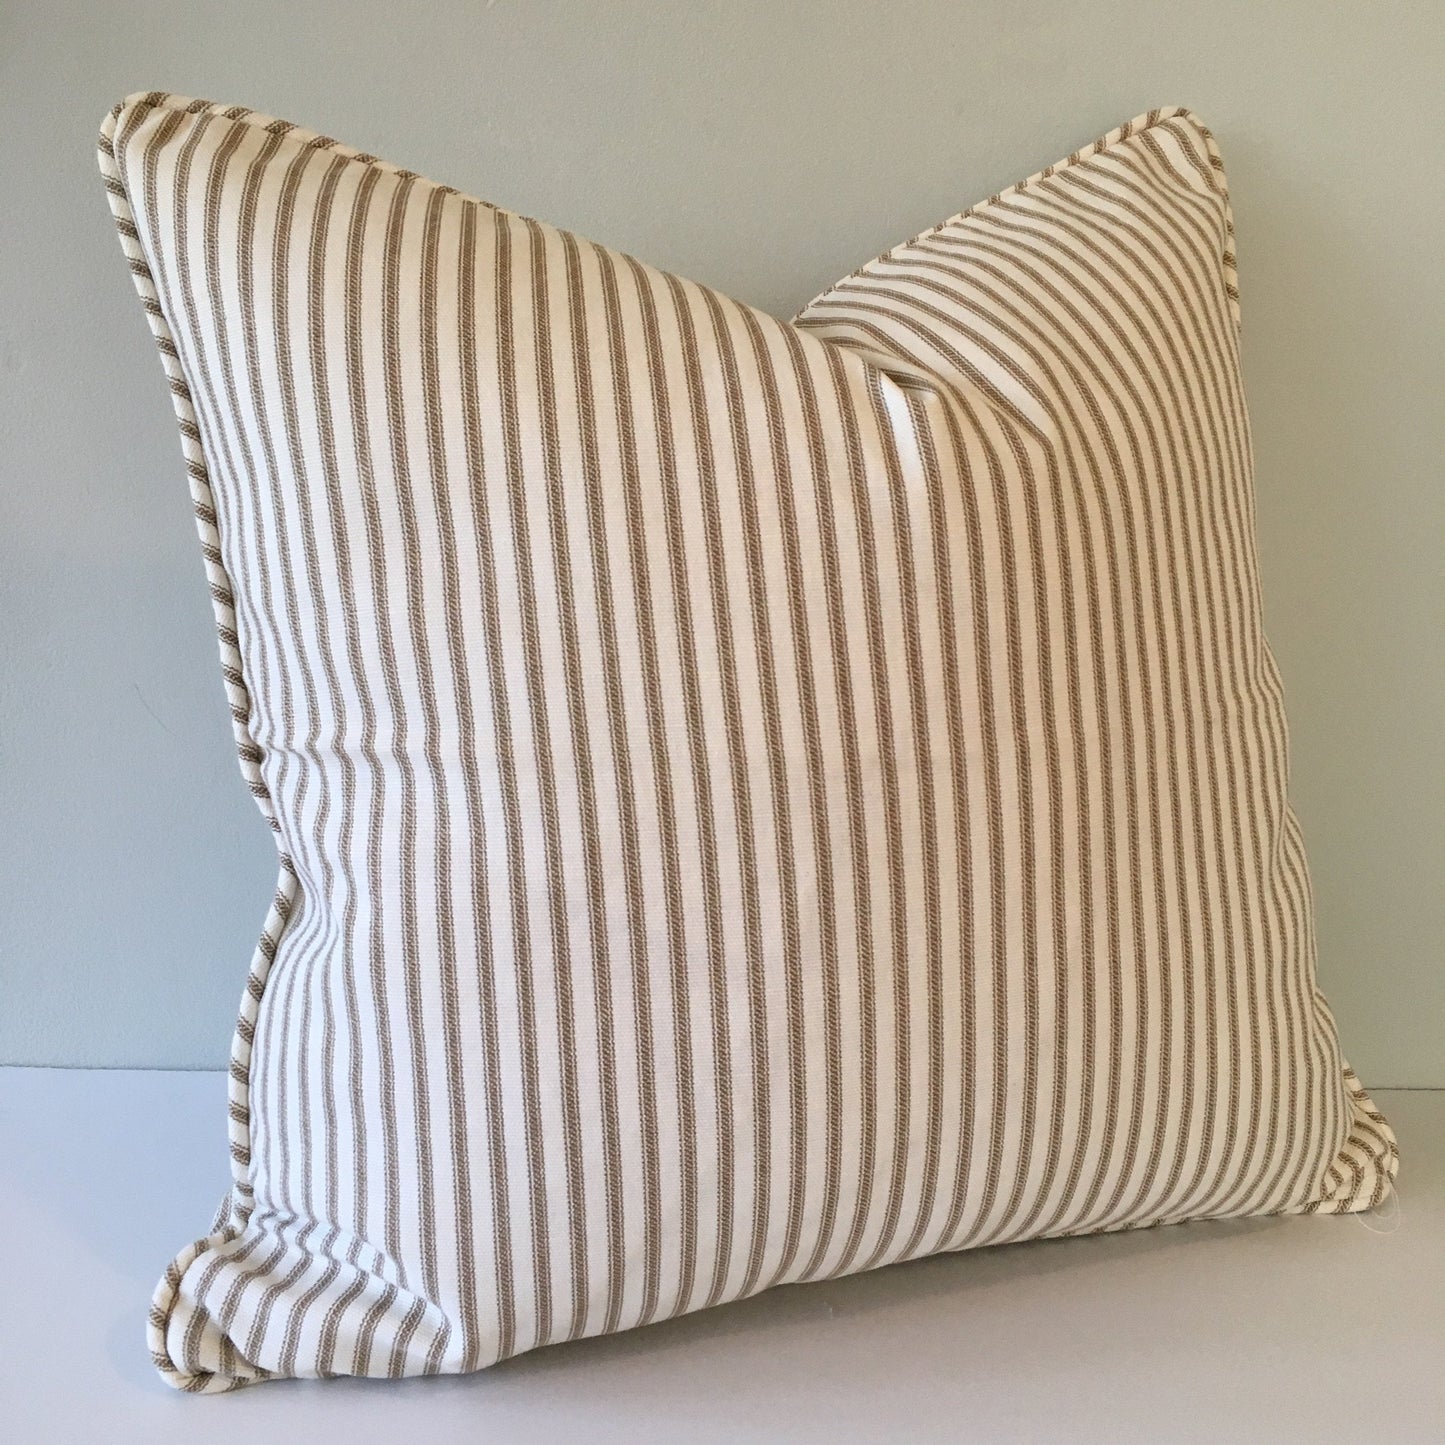 Brown Ticking Stripe Throw Pillow Cover 18x18